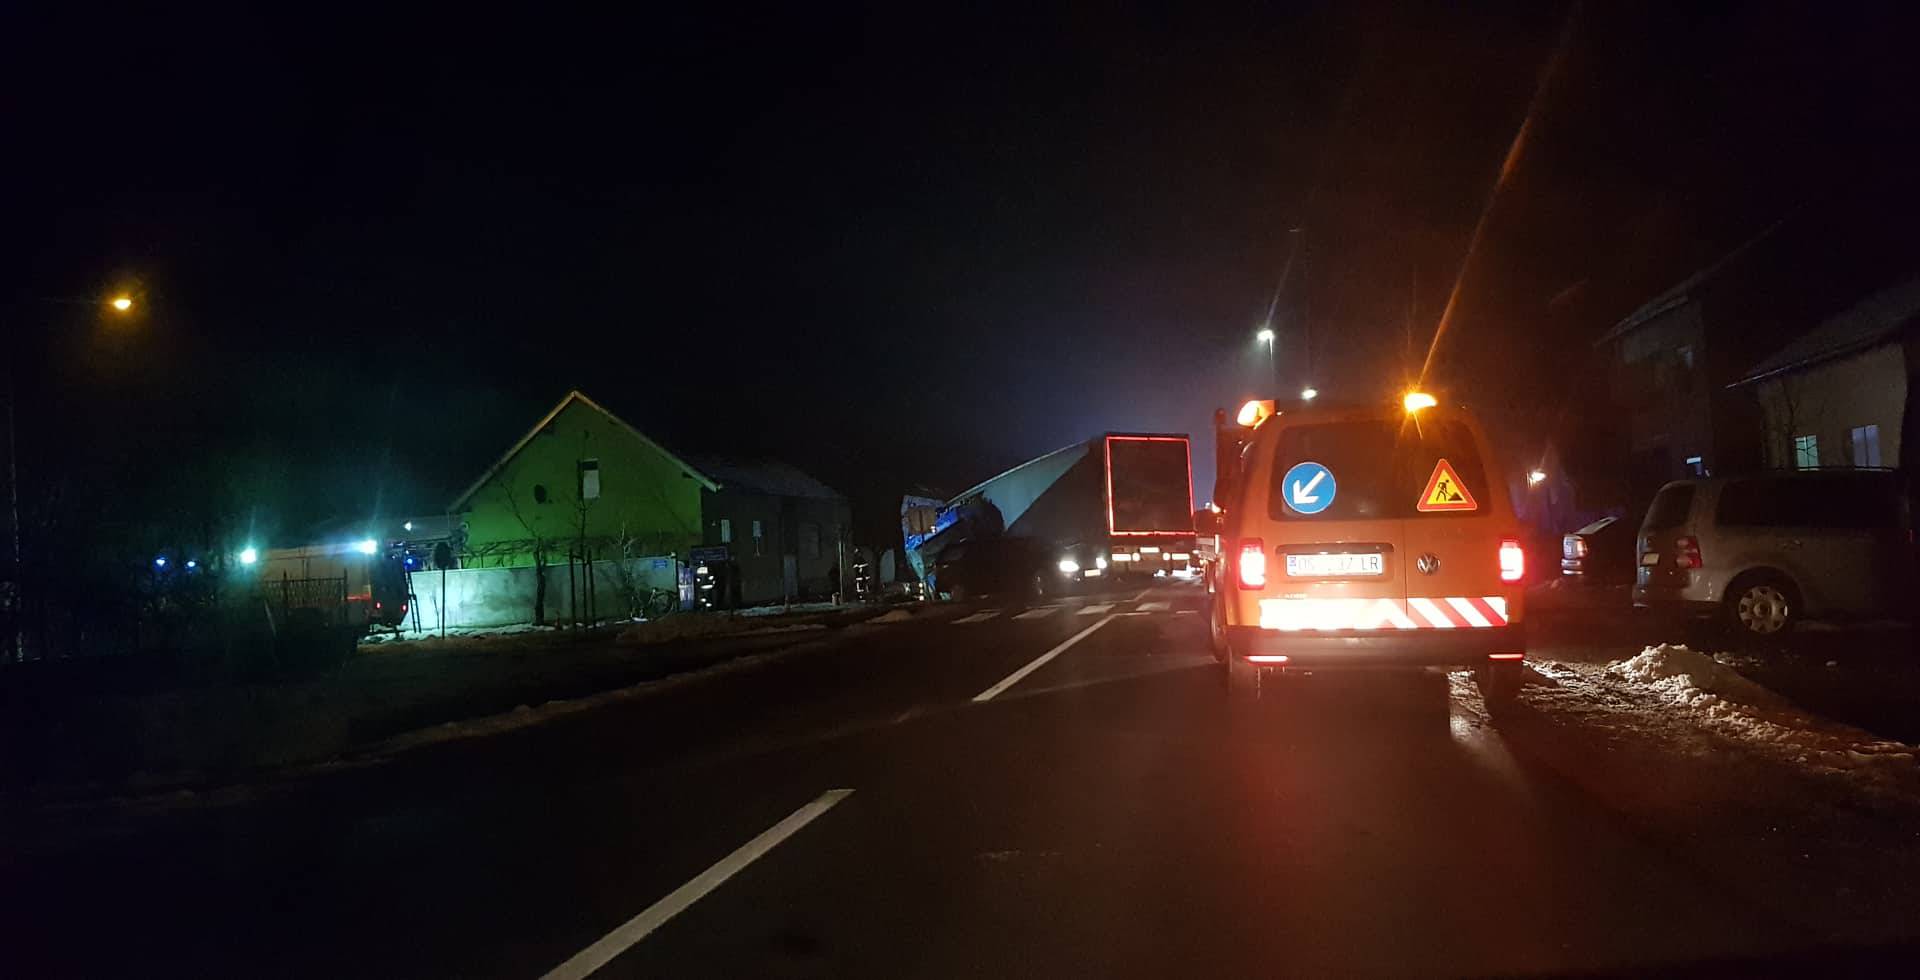 Krš i lom u Čepinu: Vozač sa 1,9 promila izletio s kamionom